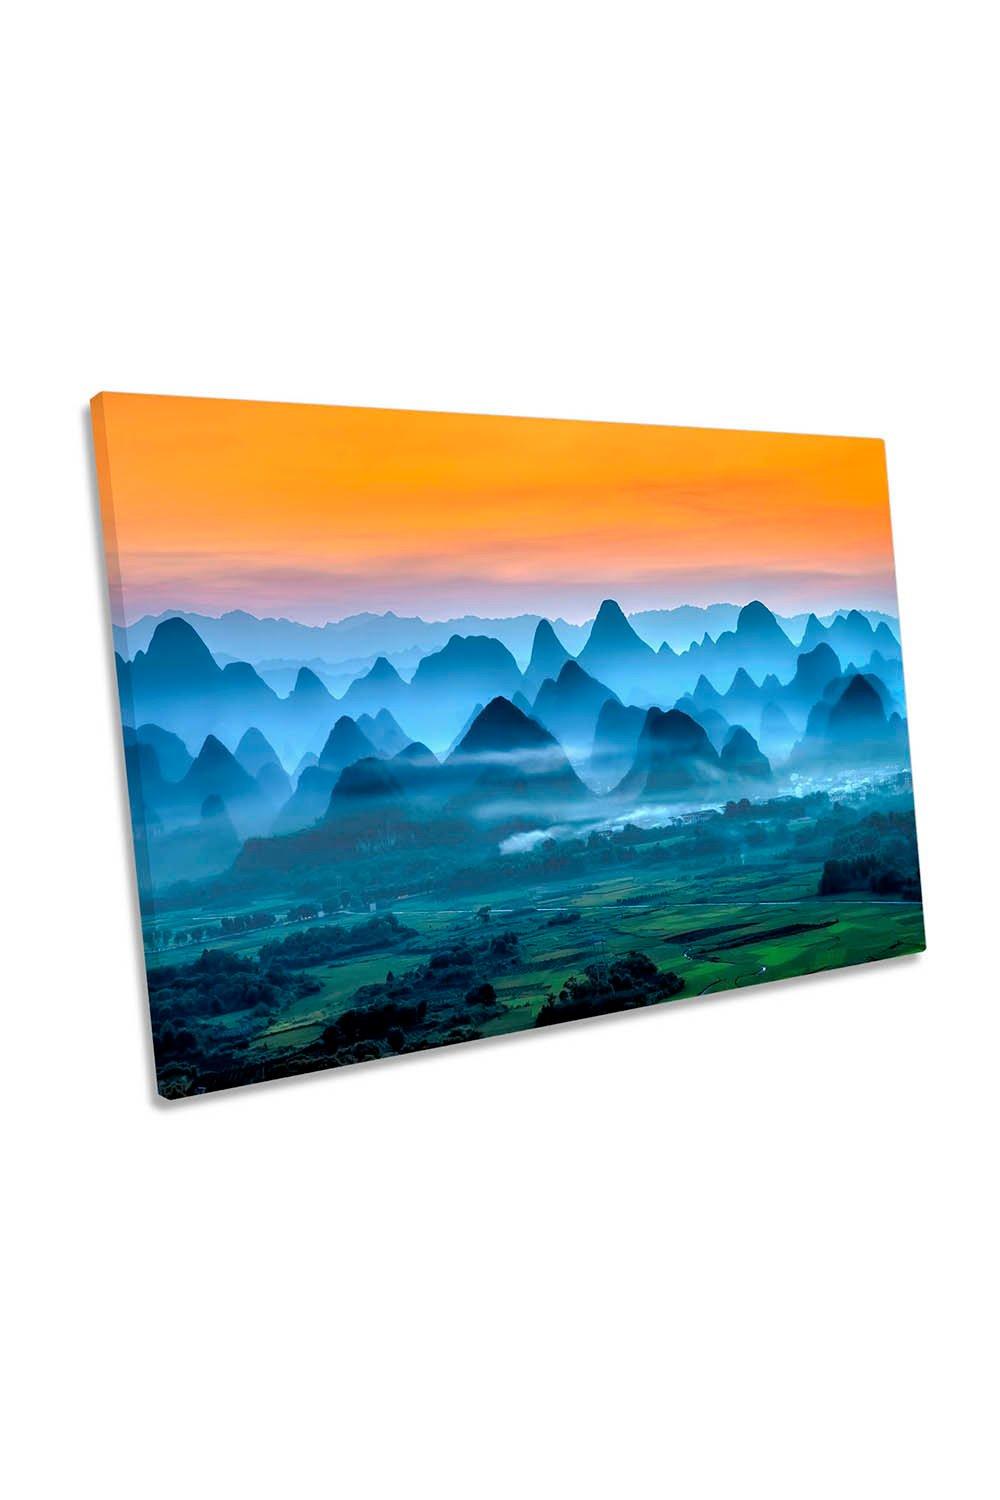 Dreamland Yangshuo Sunset Mountains China Canvas Wall Art Picture Print